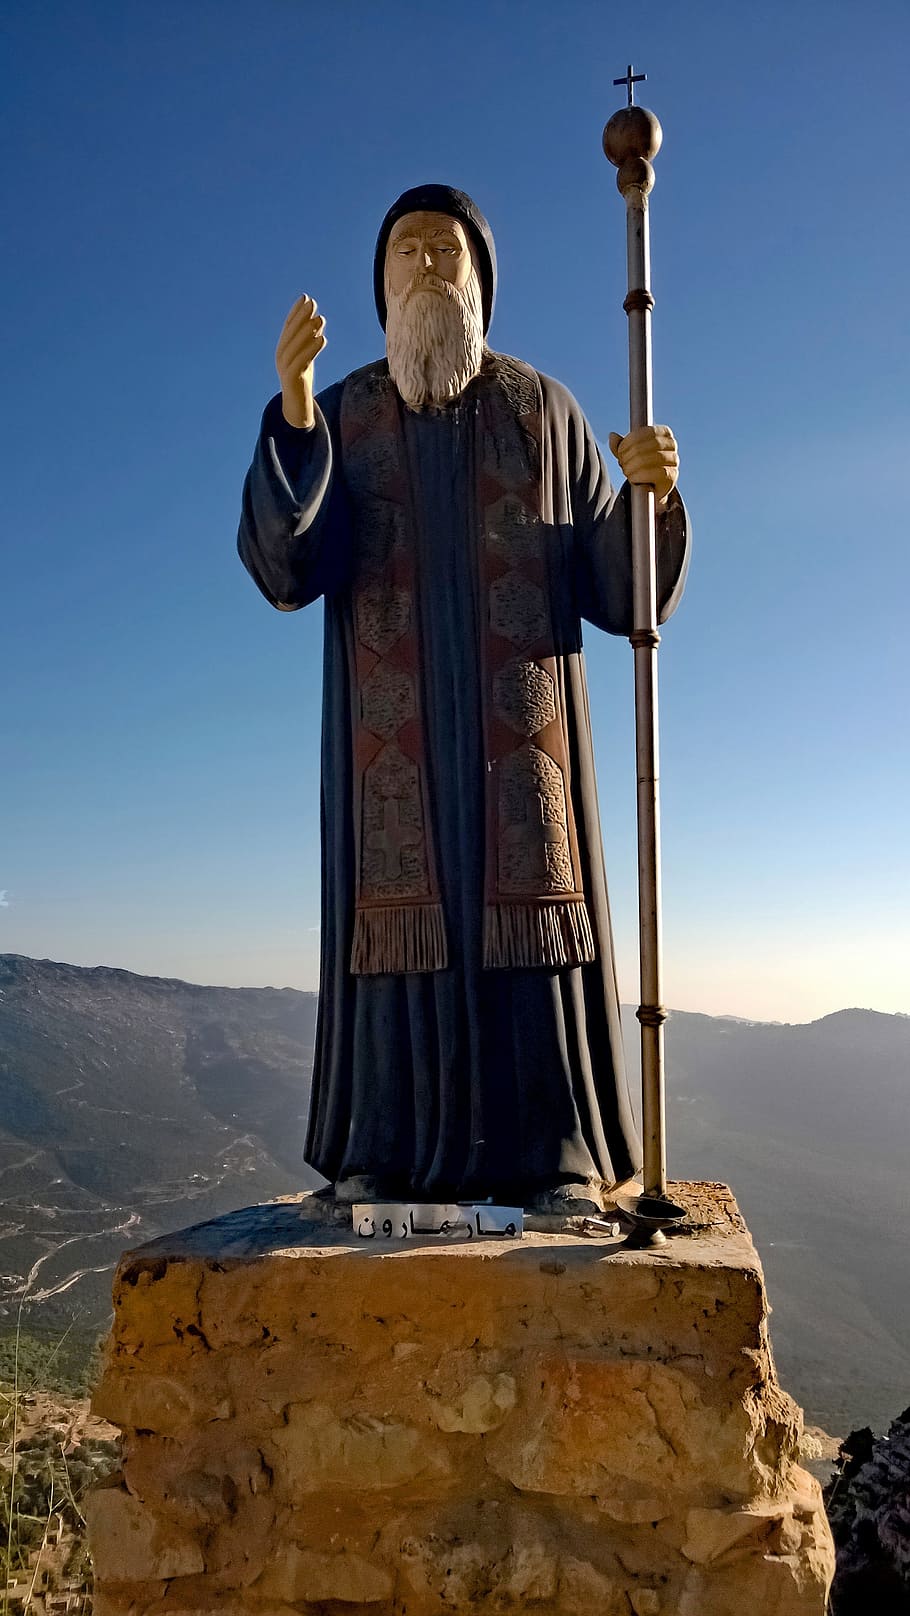 lebanon, statue, priest, hardine, mountain, sky, sculpture